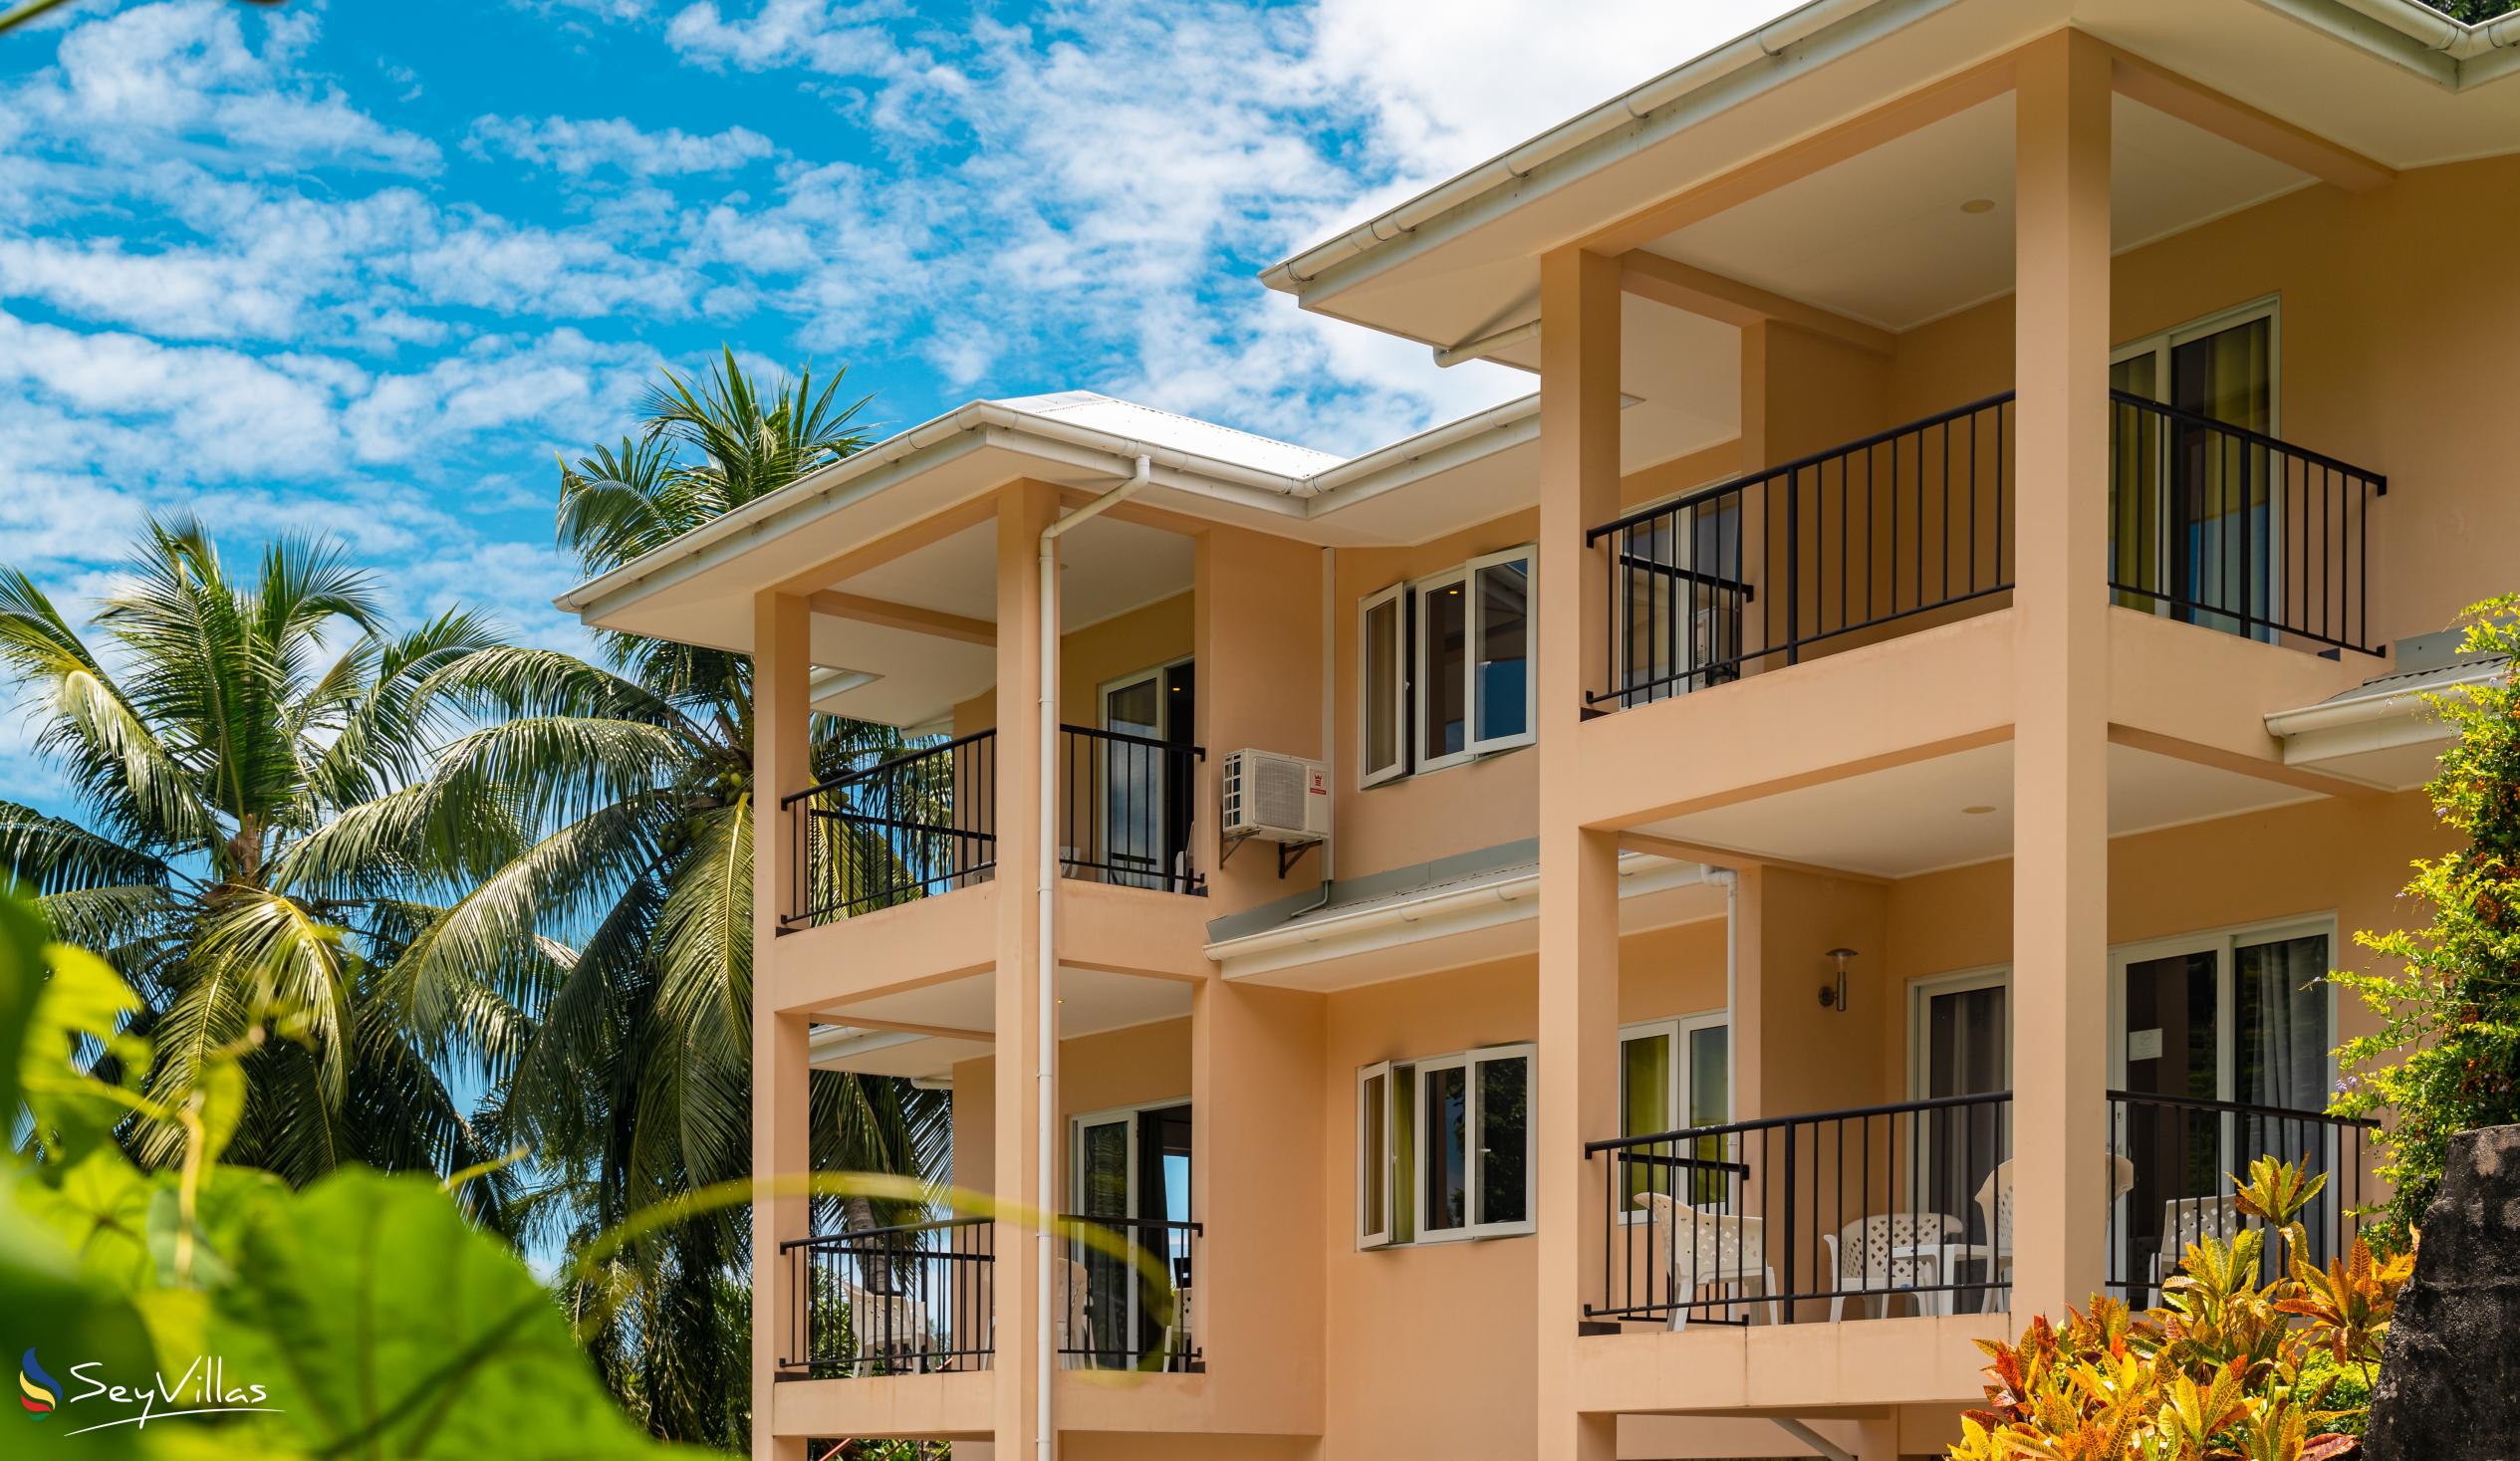 Photo 6: JAIDSS Holiday Apartments - Outdoor area - Mahé (Seychelles)